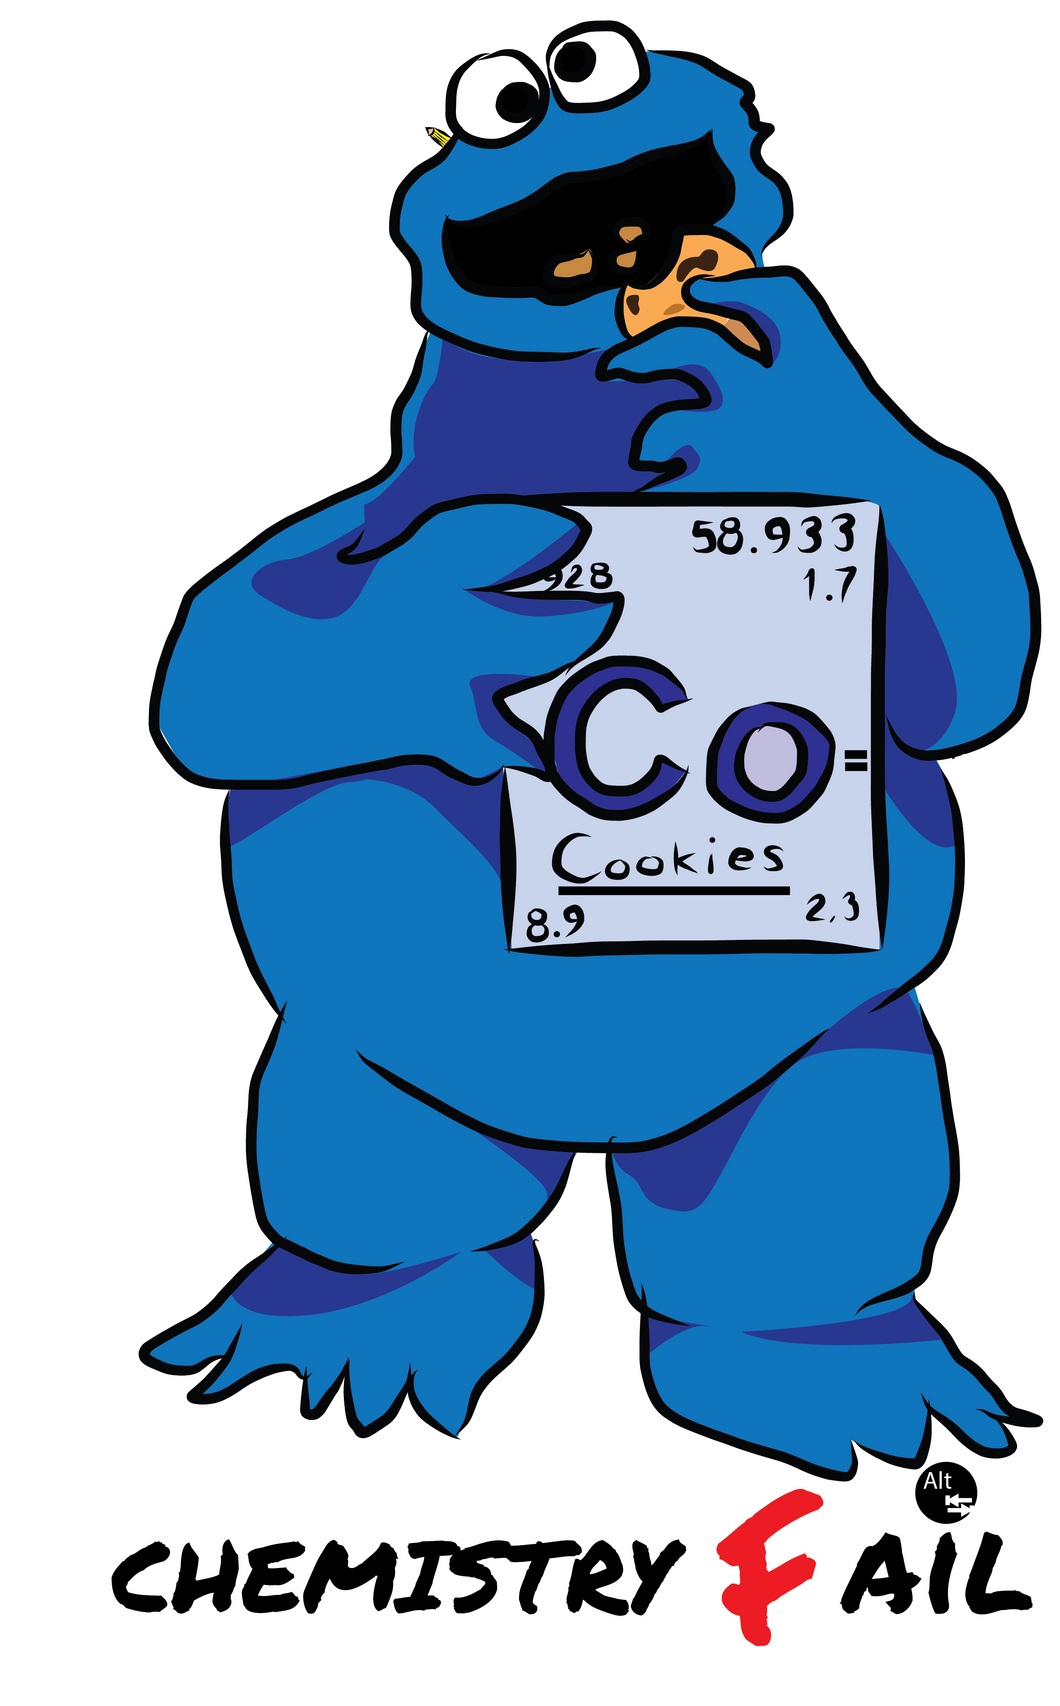 Blue Monster Sticker